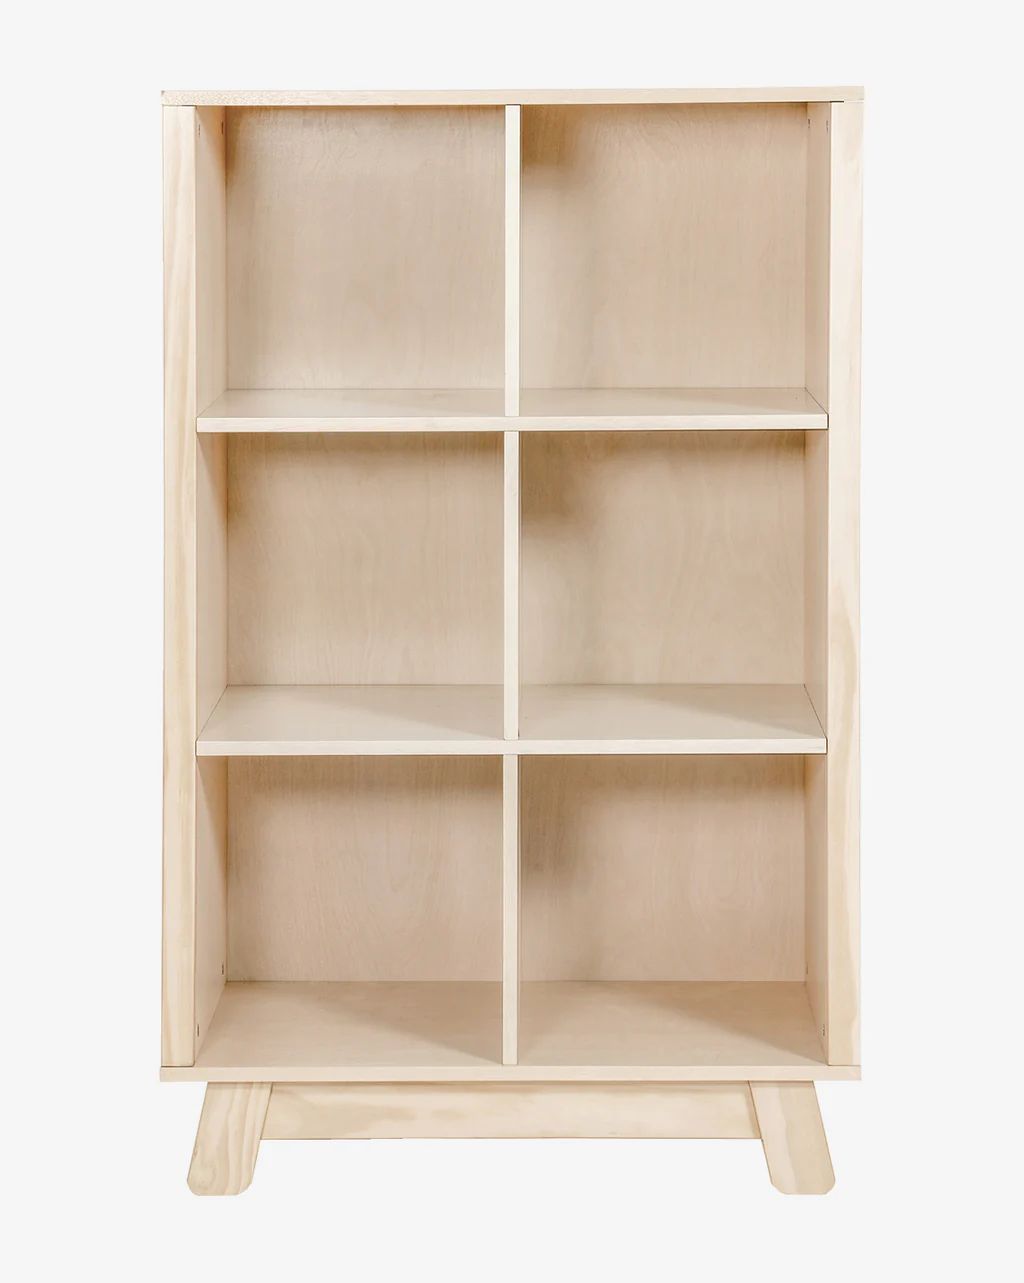 Hudson Bookcase | McGee & Co.